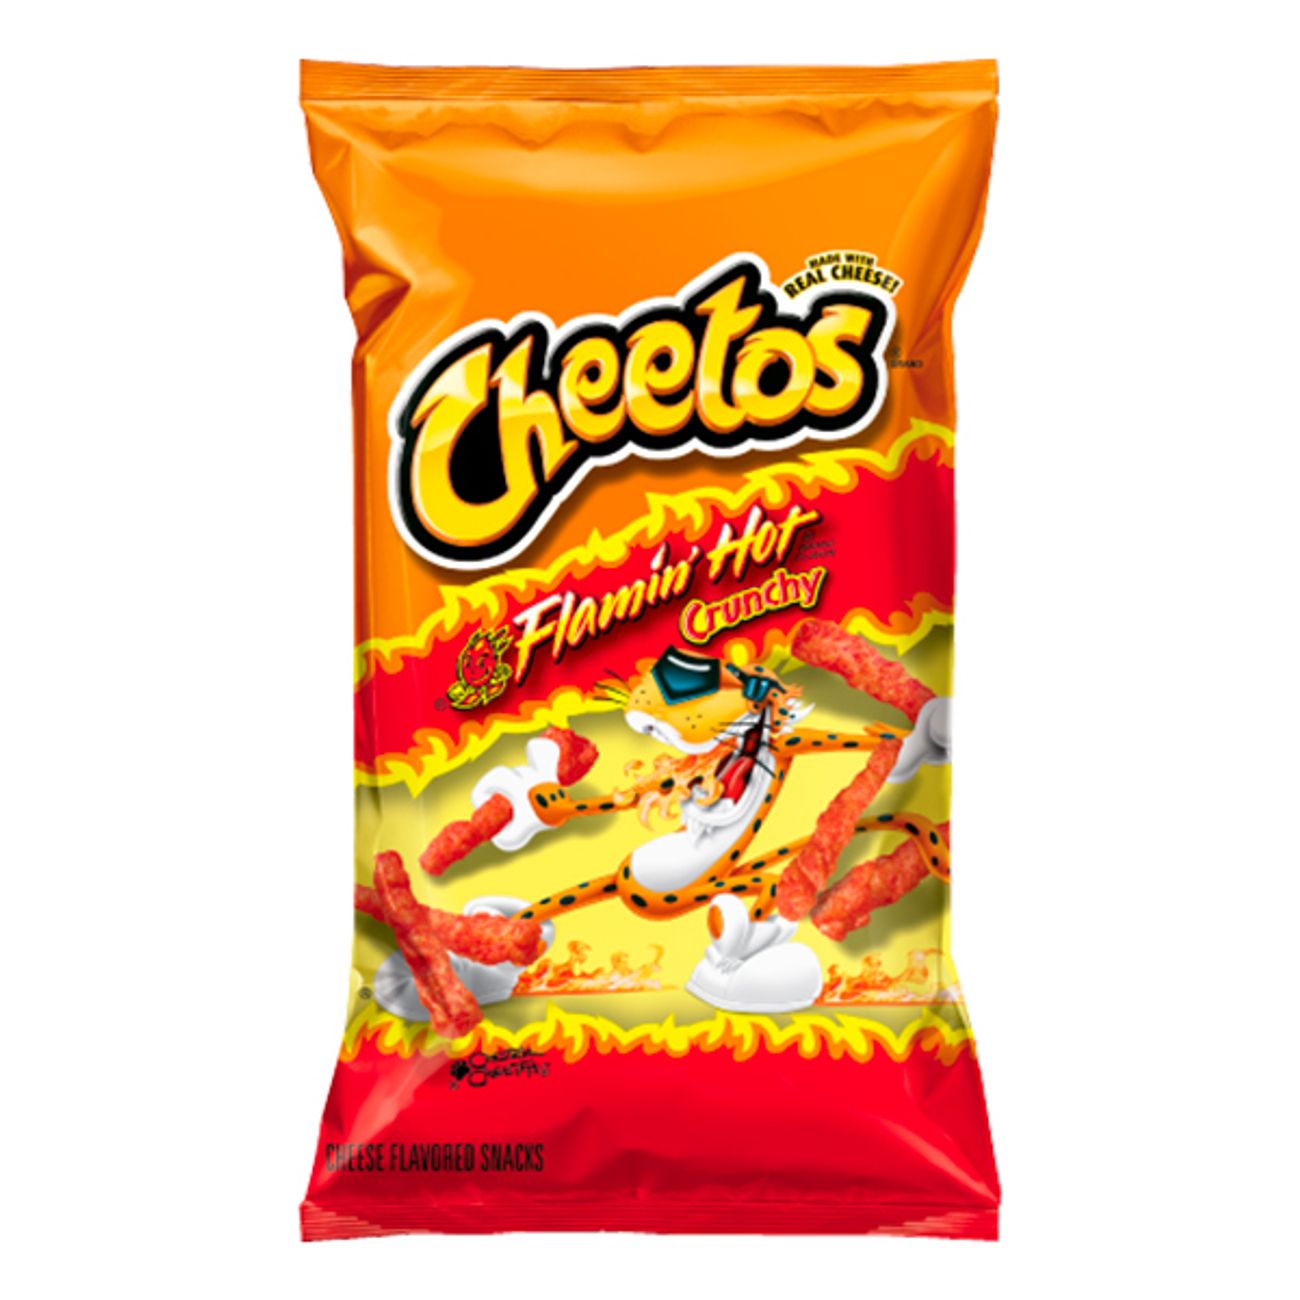 cheetos-crunchy-flamin-hot-2